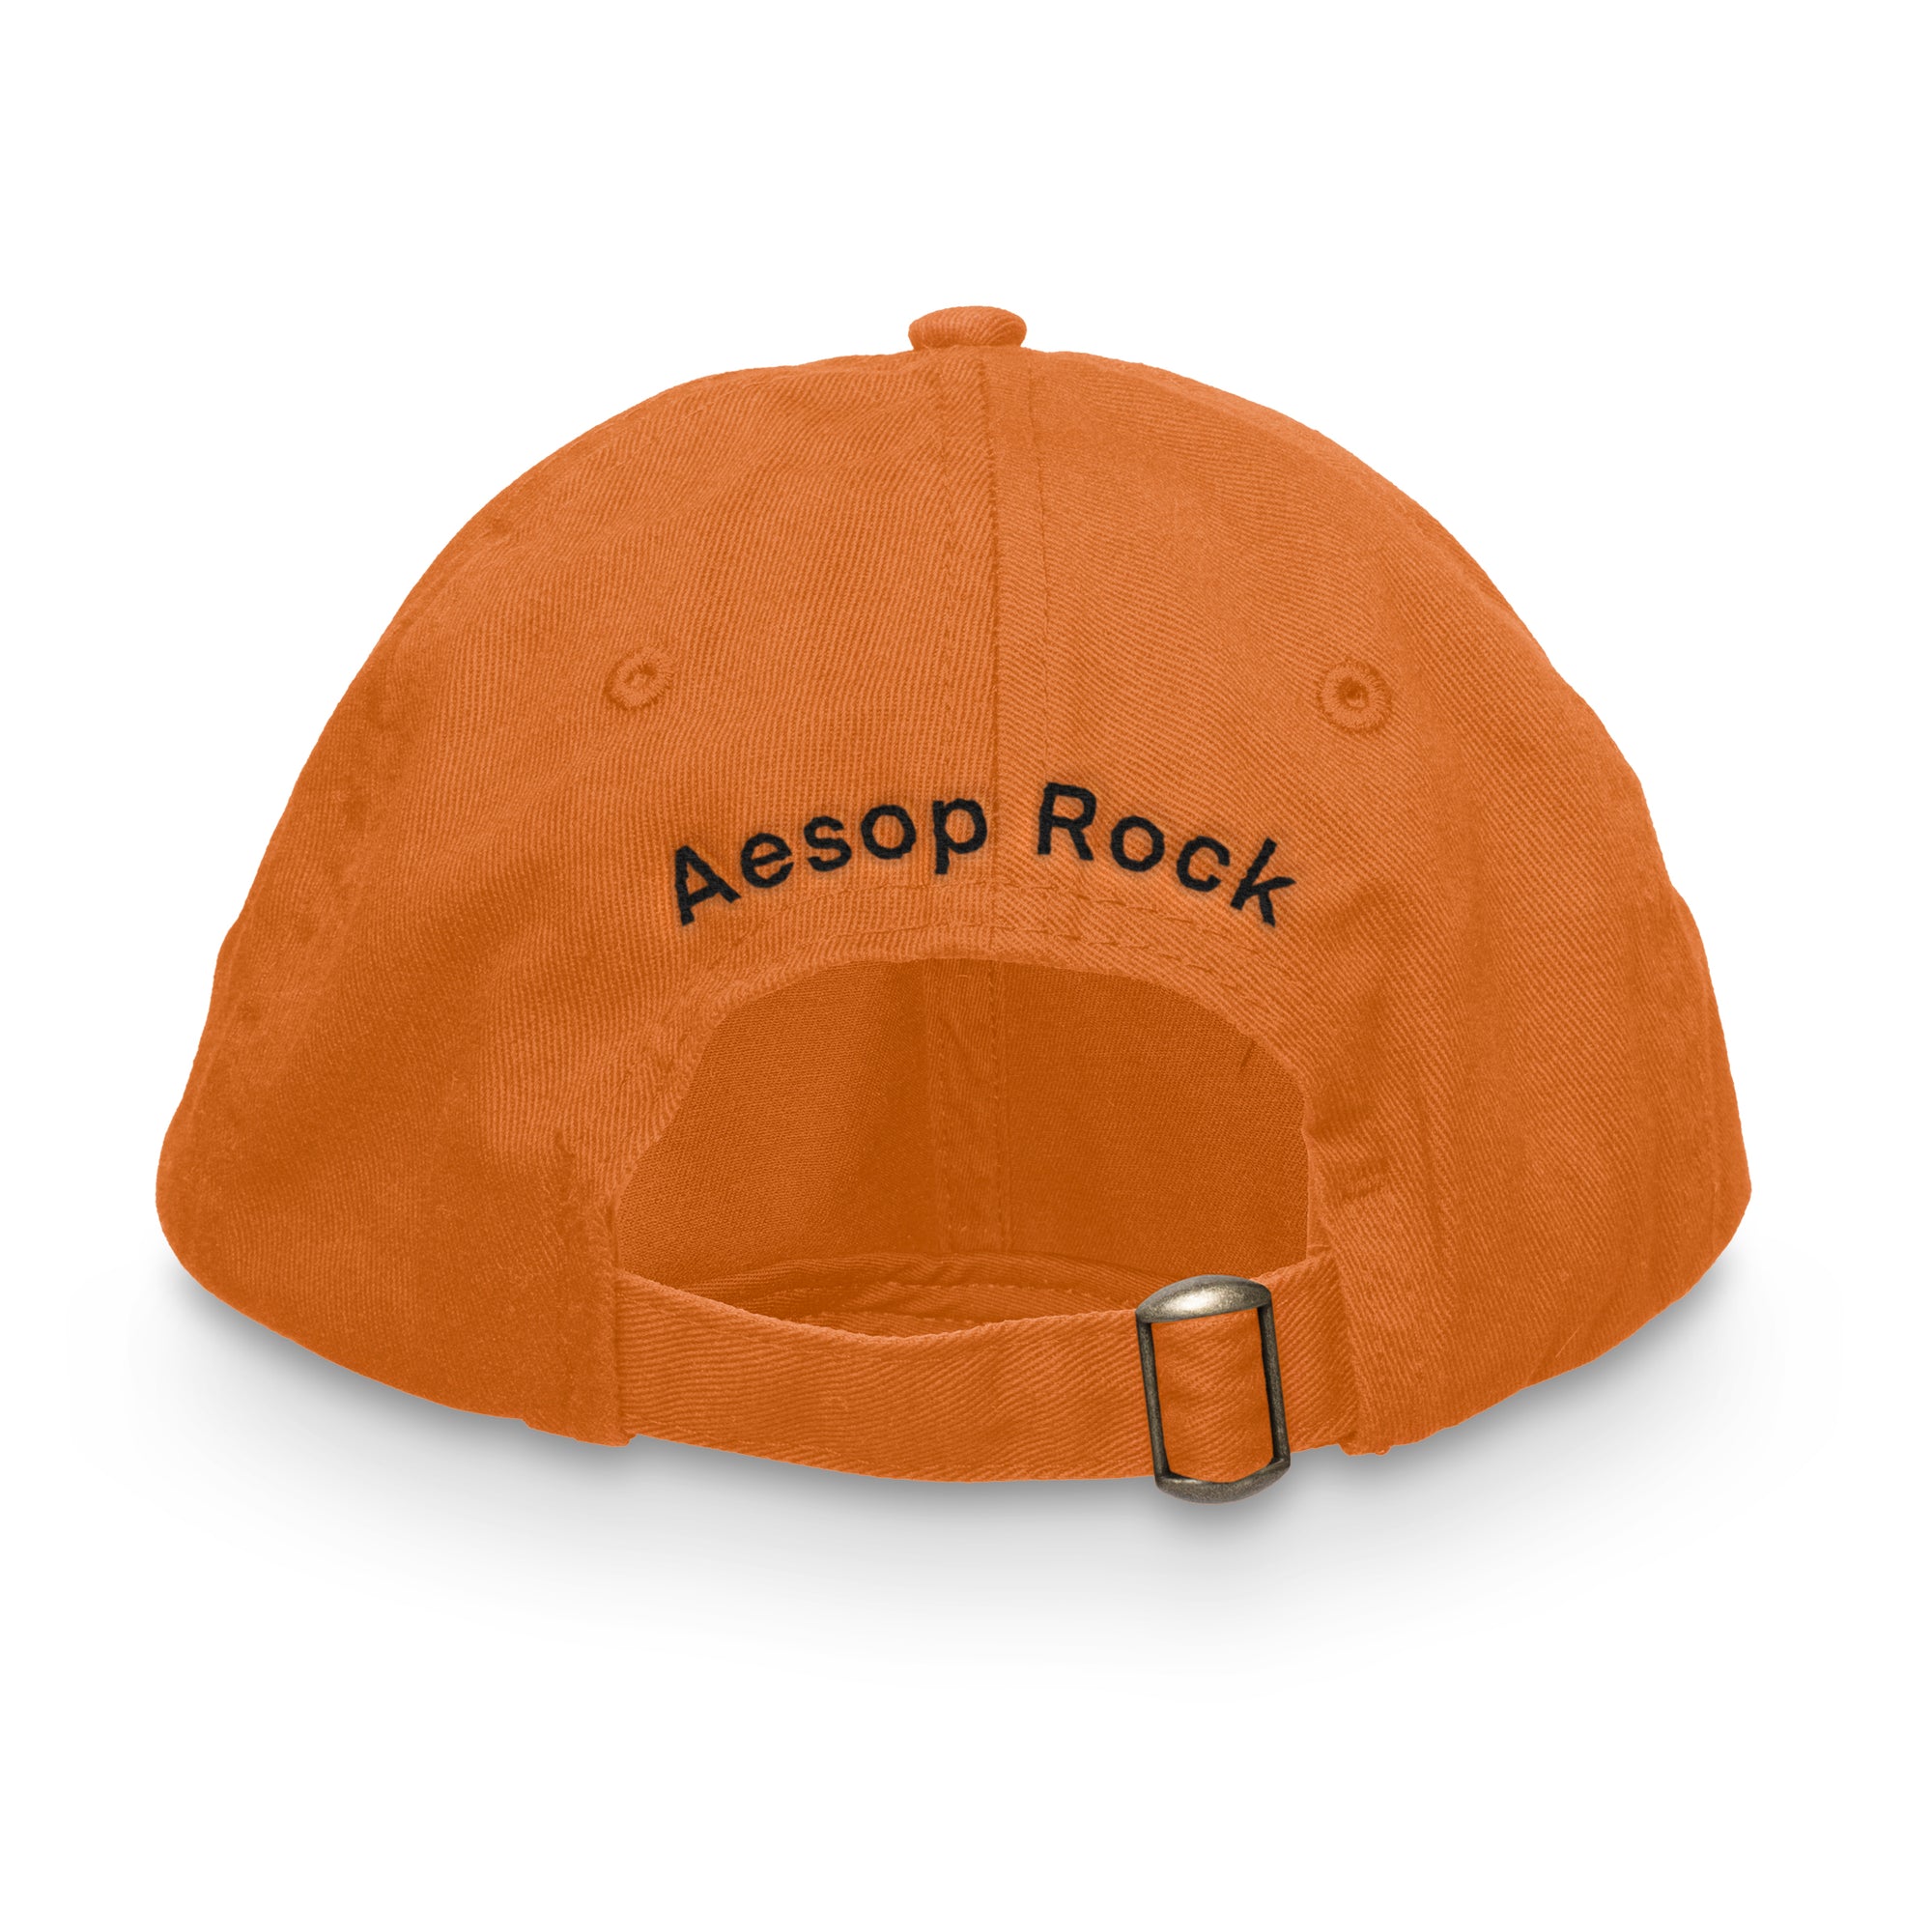 Aesop Rock - ITS Embroidered Hat (Orange)